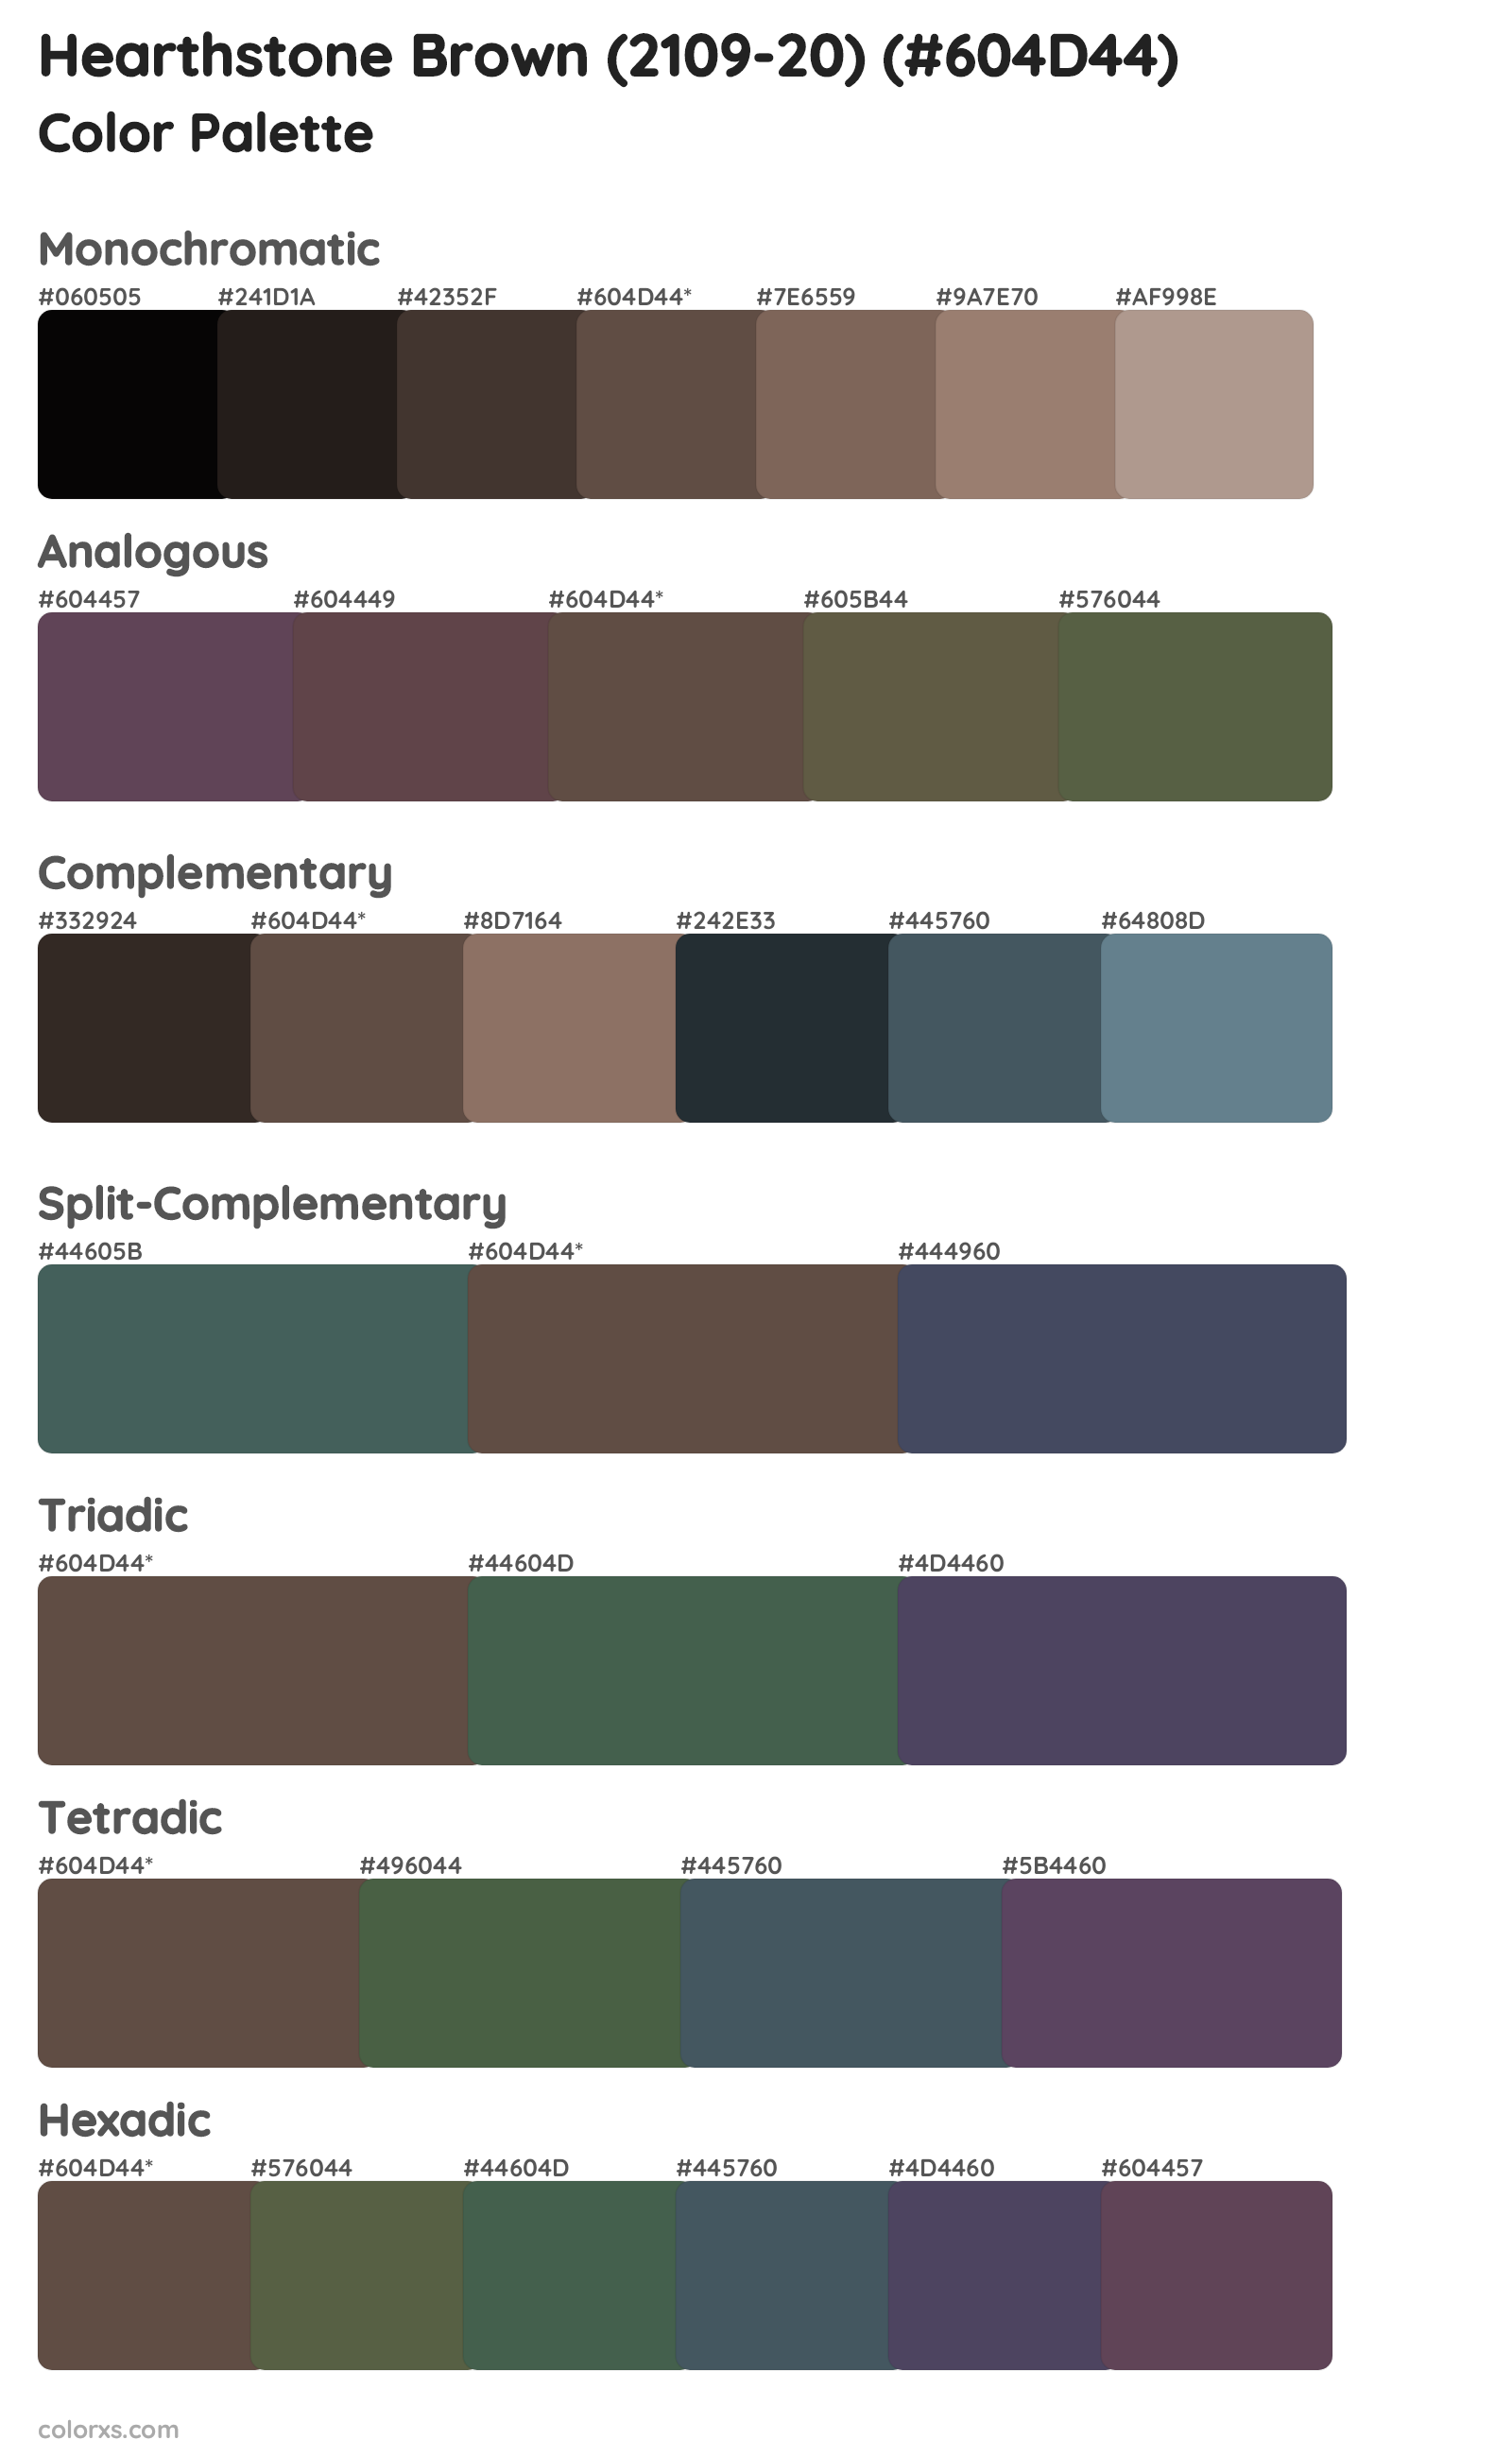 Hearthstone Brown (2109-20) Color Scheme Palettes